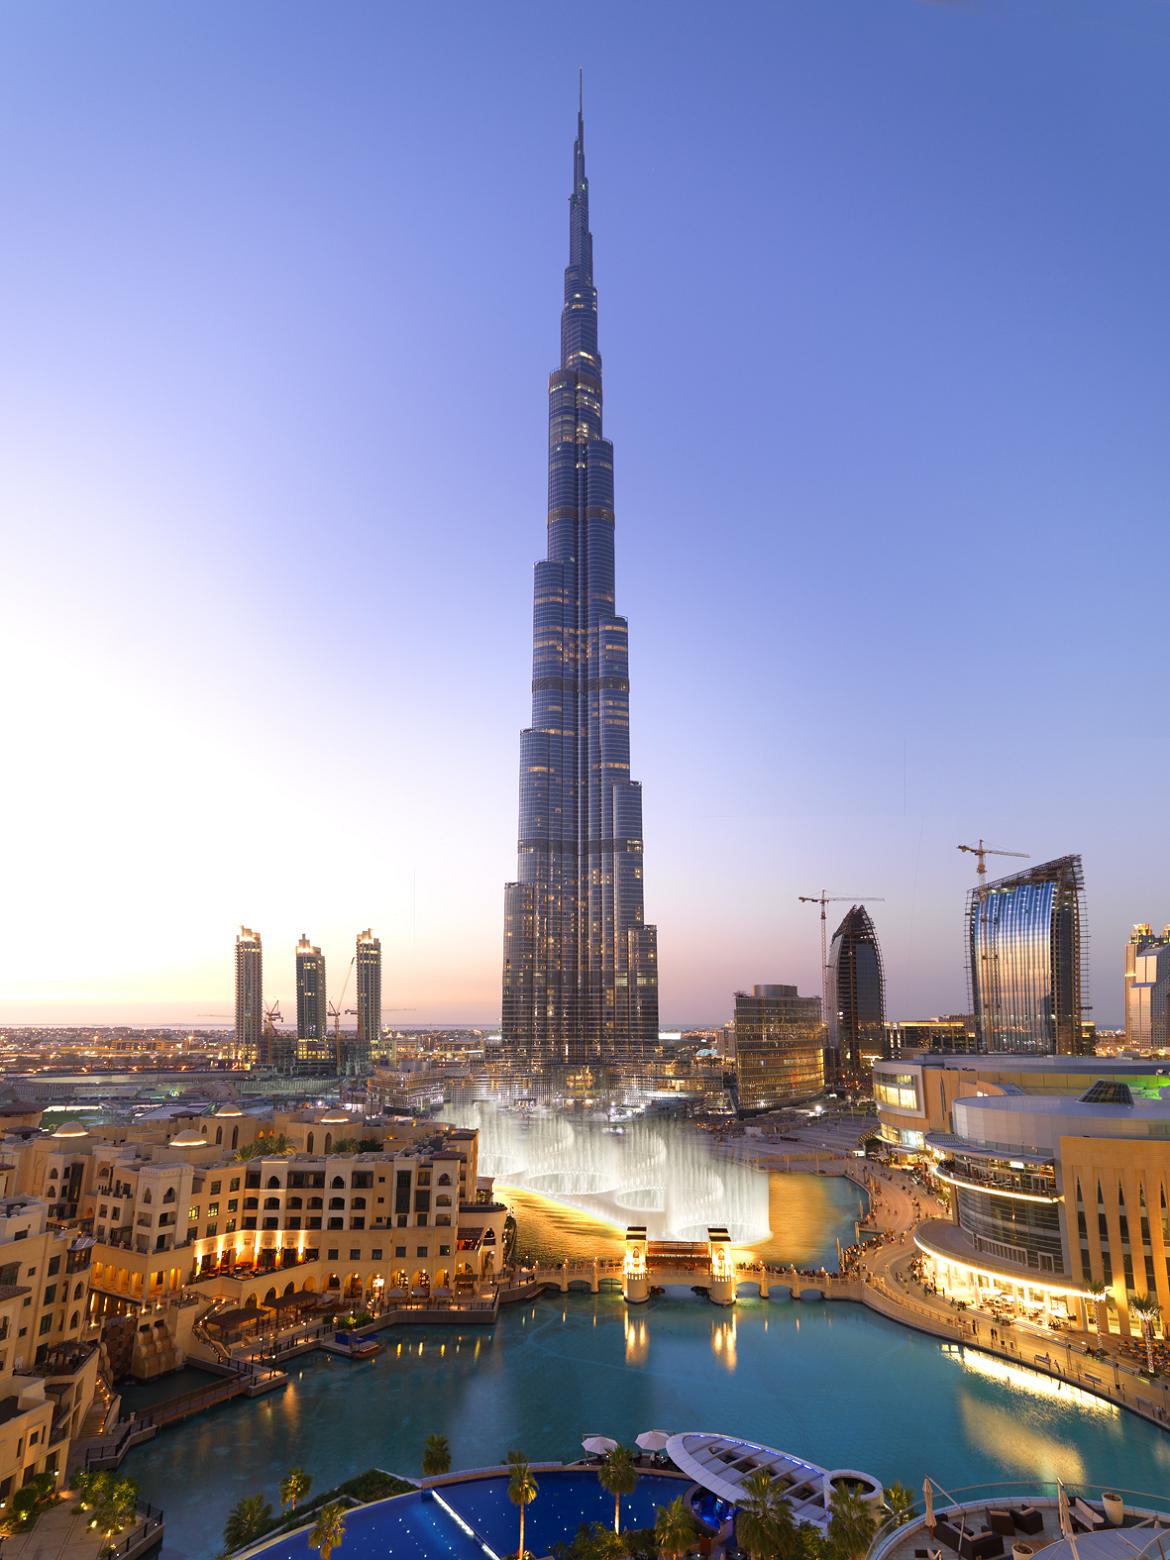 Burj Khalifa by Emaar Properties